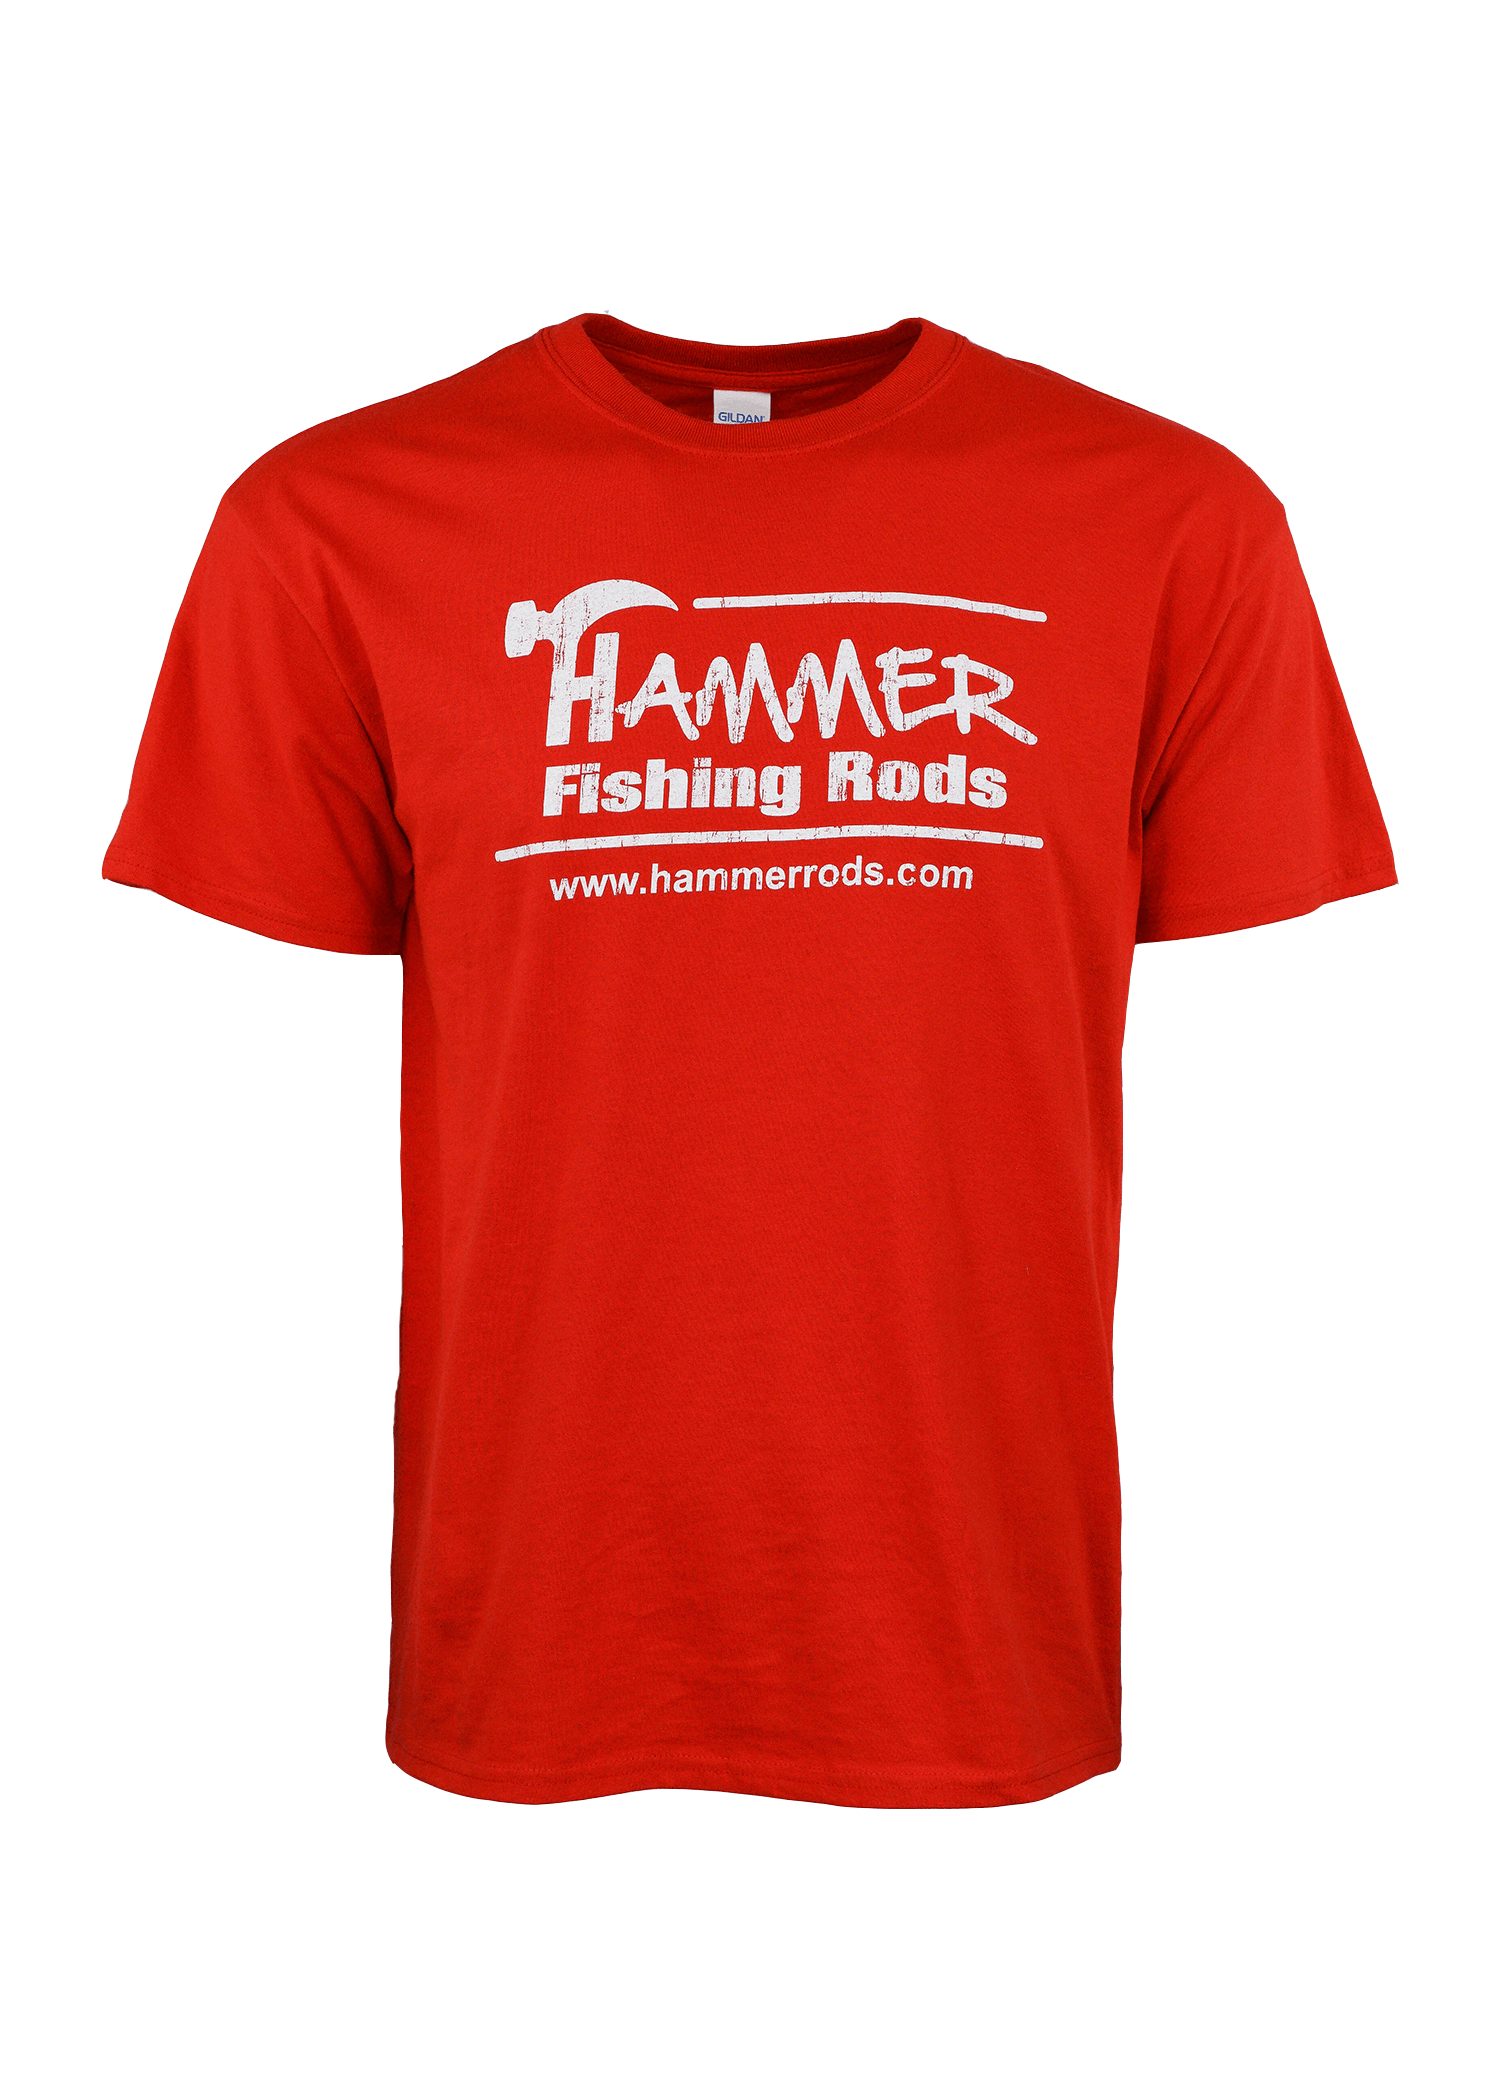 Hammer Fishing Rods Shirt - Red - Hammer Rods